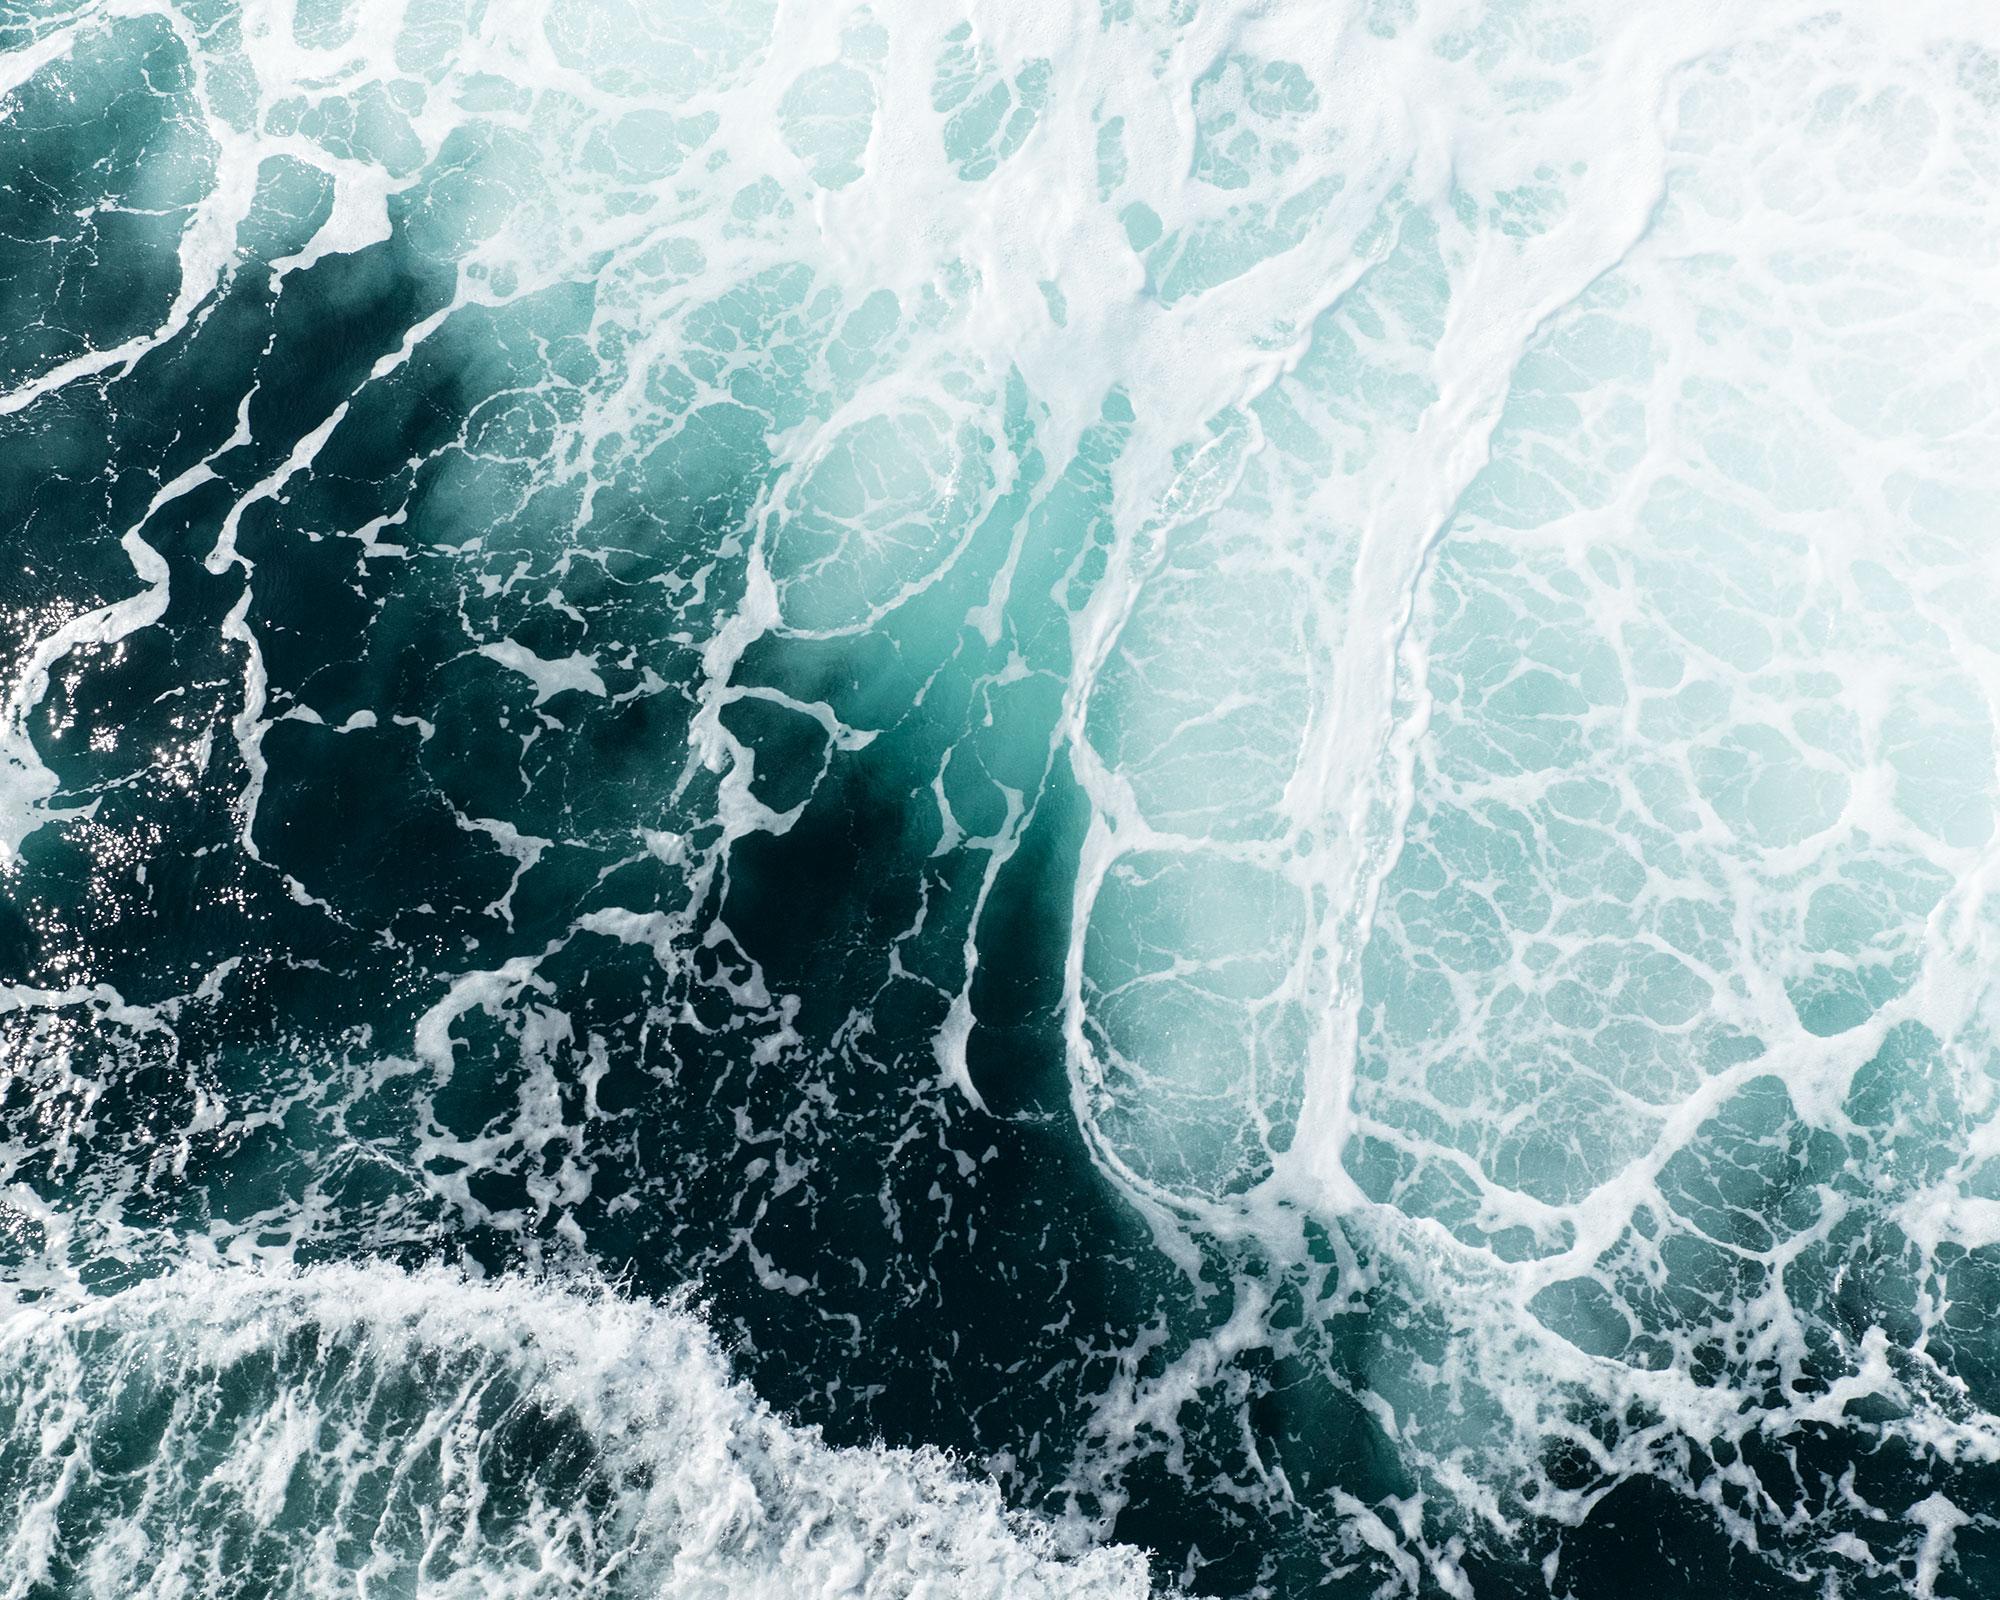 Tommy Kwak Landscape Photograph - "Waves 8" - contemporary photograph, ocean